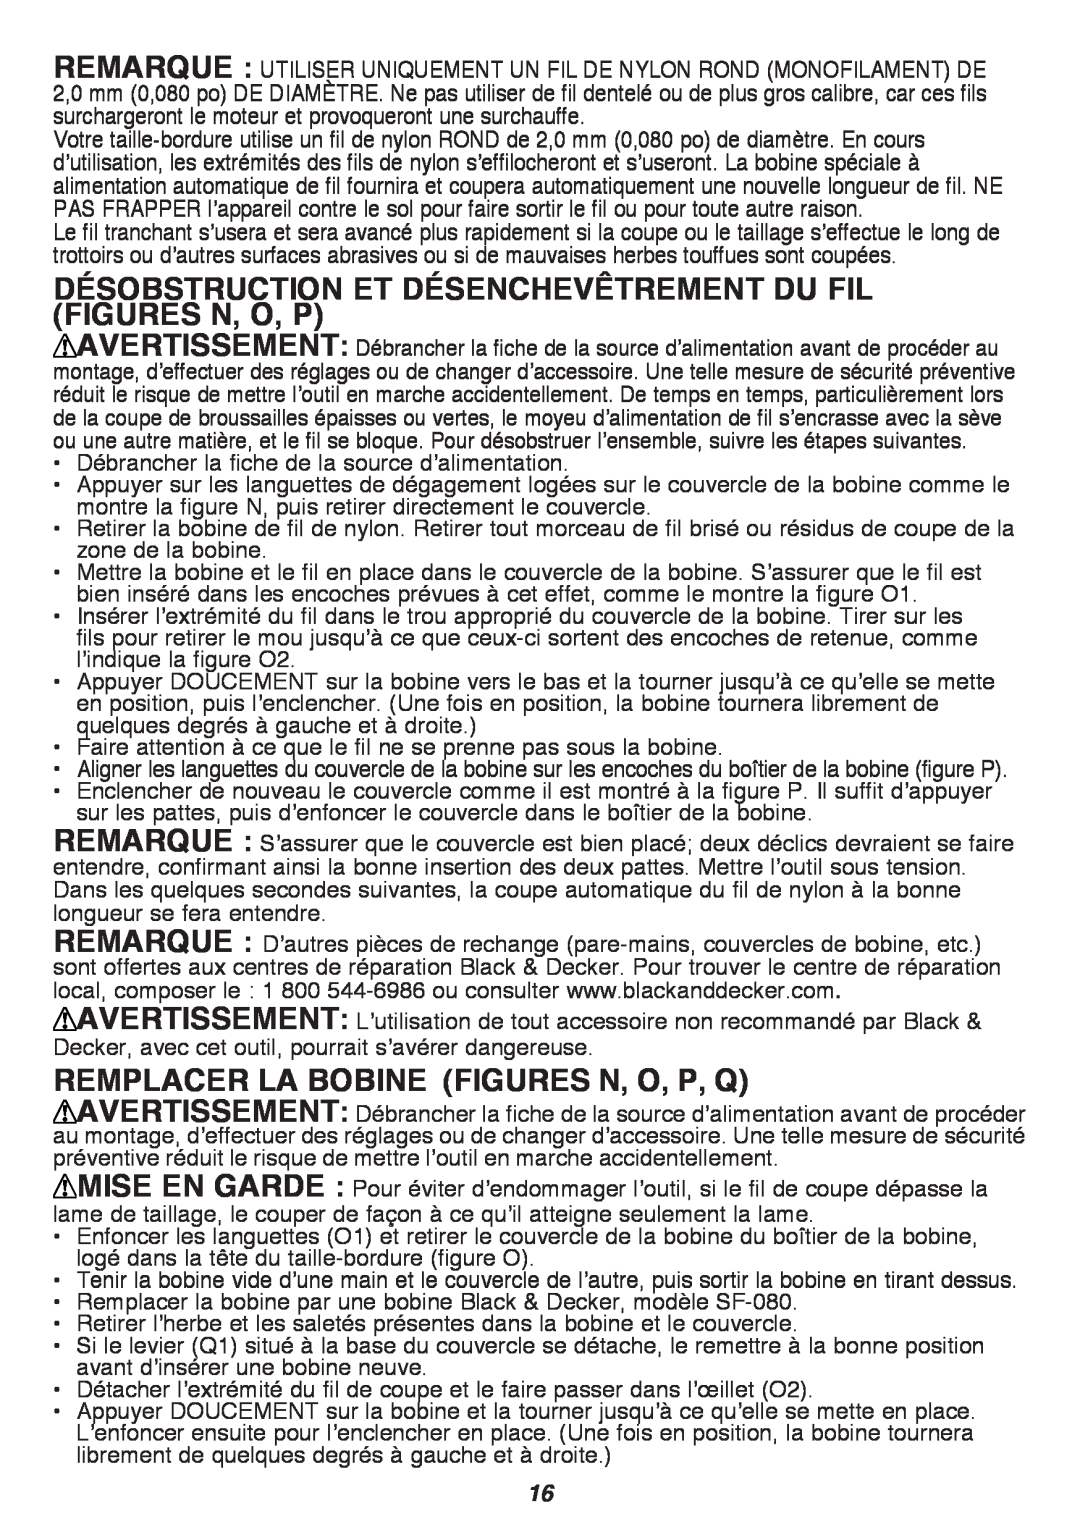 Black & Decker GH3000 instruction manual REMPLACER LA BOBINE figures N, O, P, Q 